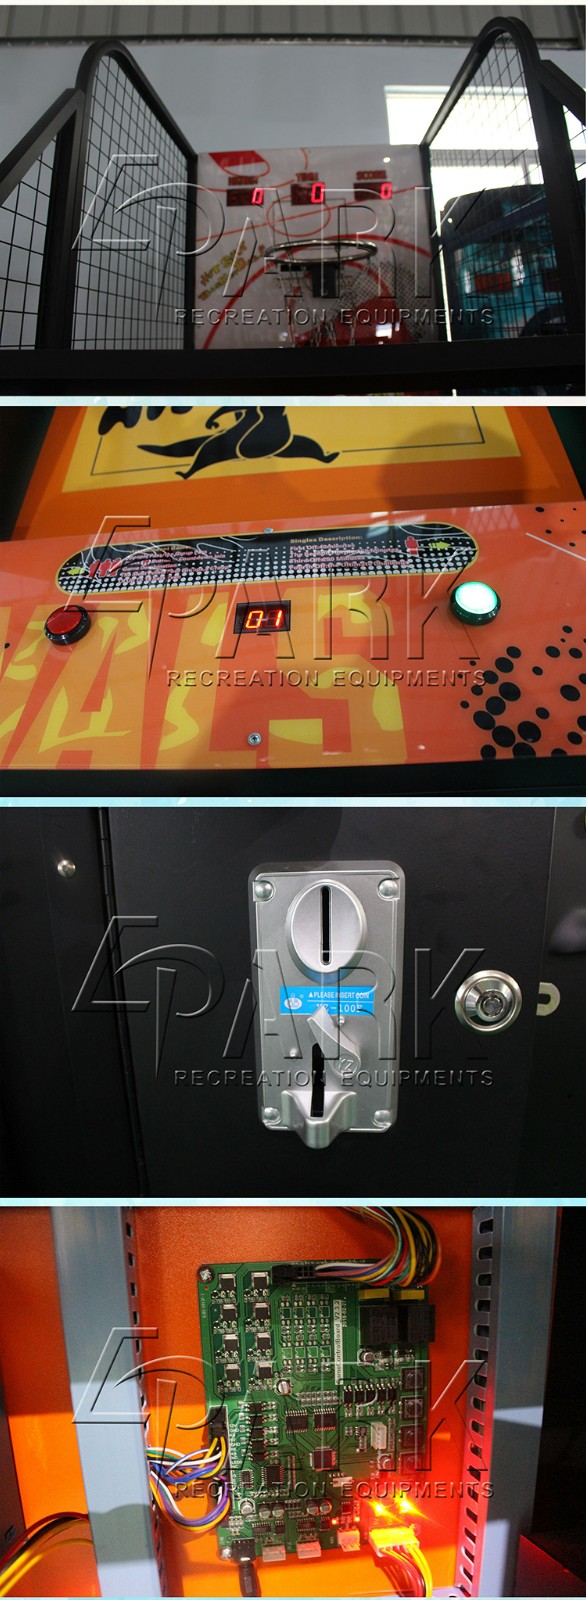 Nanyue Normal Basketball Machine Coin Amusement Electric Indoor Basketball Shopoting Game Machine